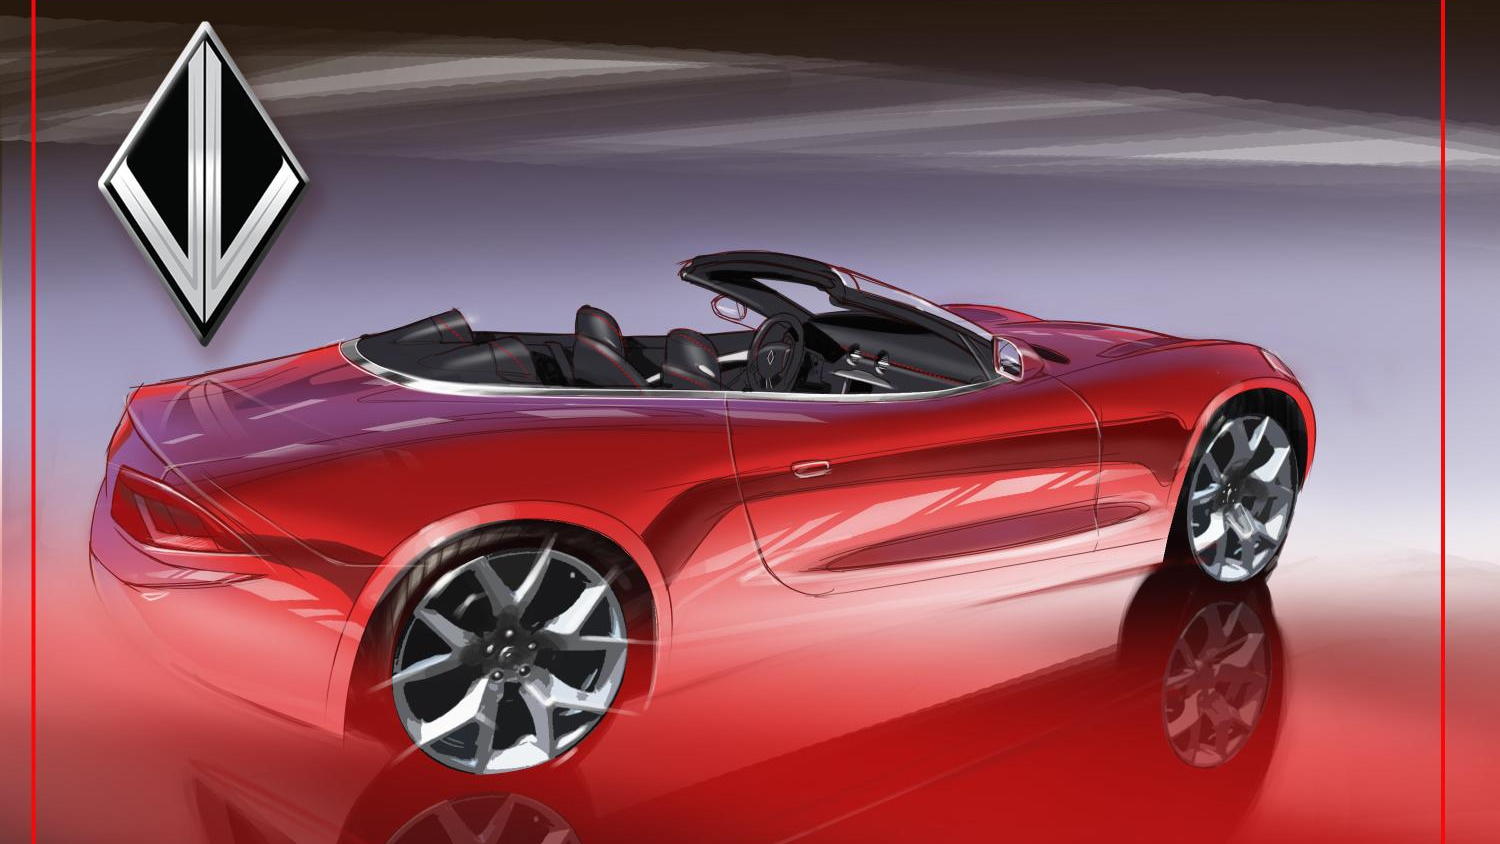 VL Destino convertible concept rendering